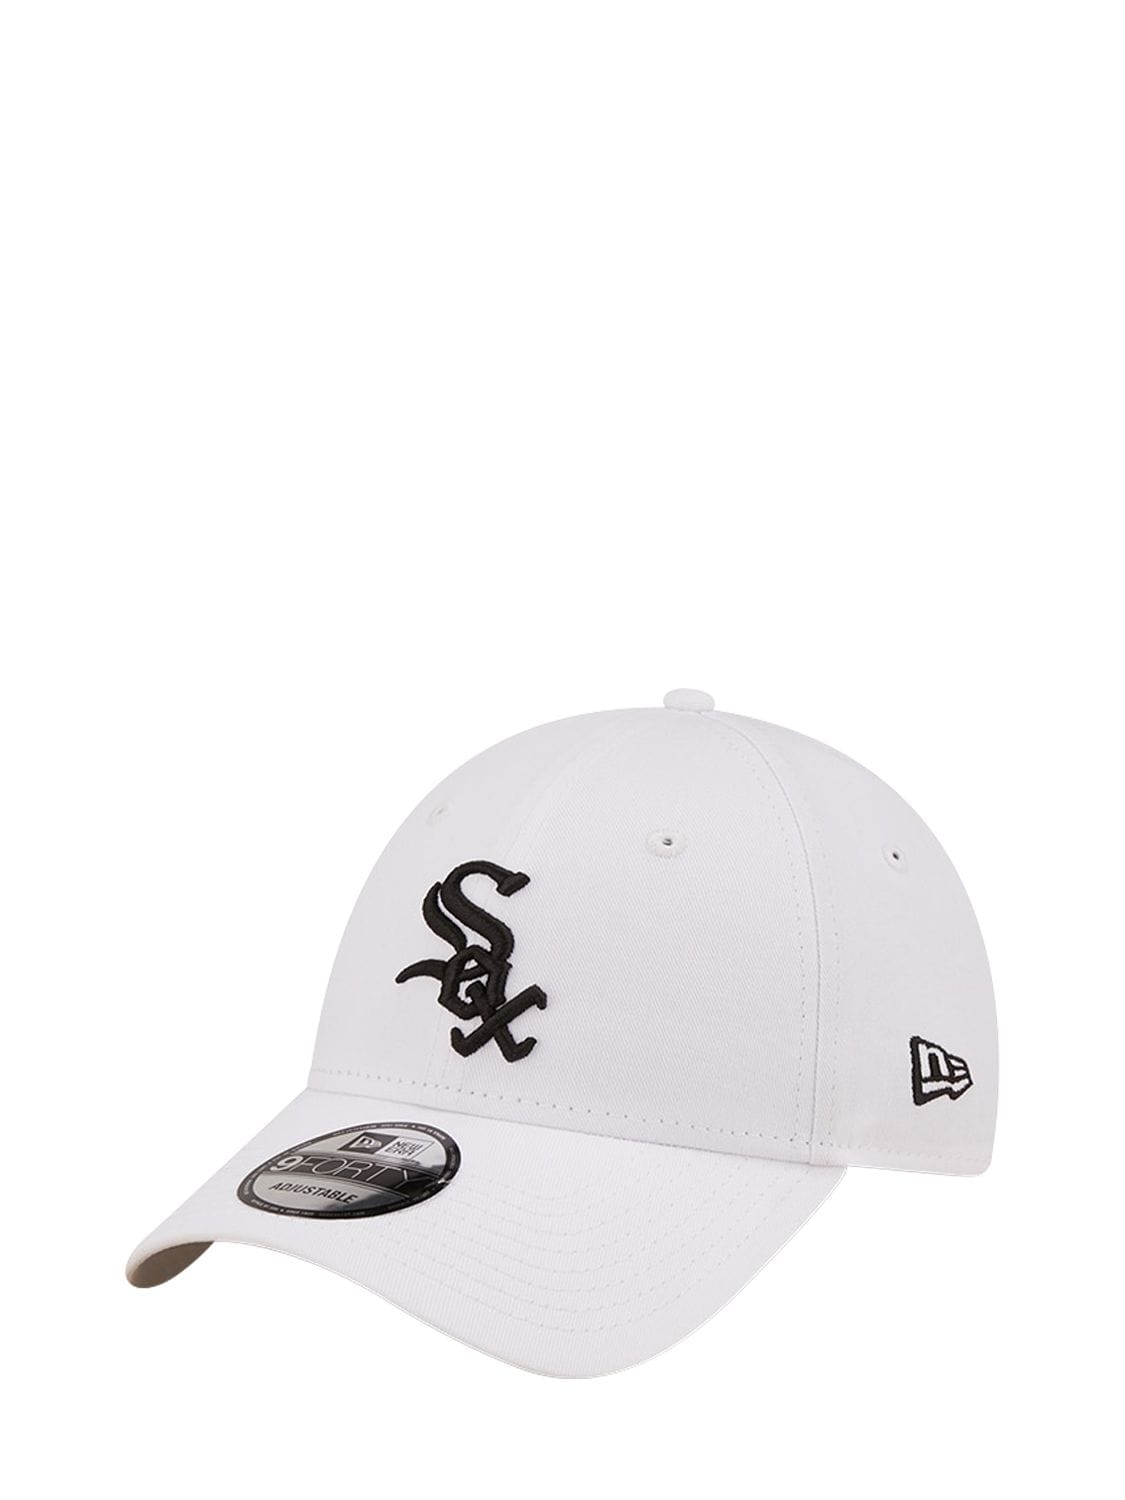 New Era Chicago White Sox Black Trucker 9FORTY Adjustable Snapback Hat